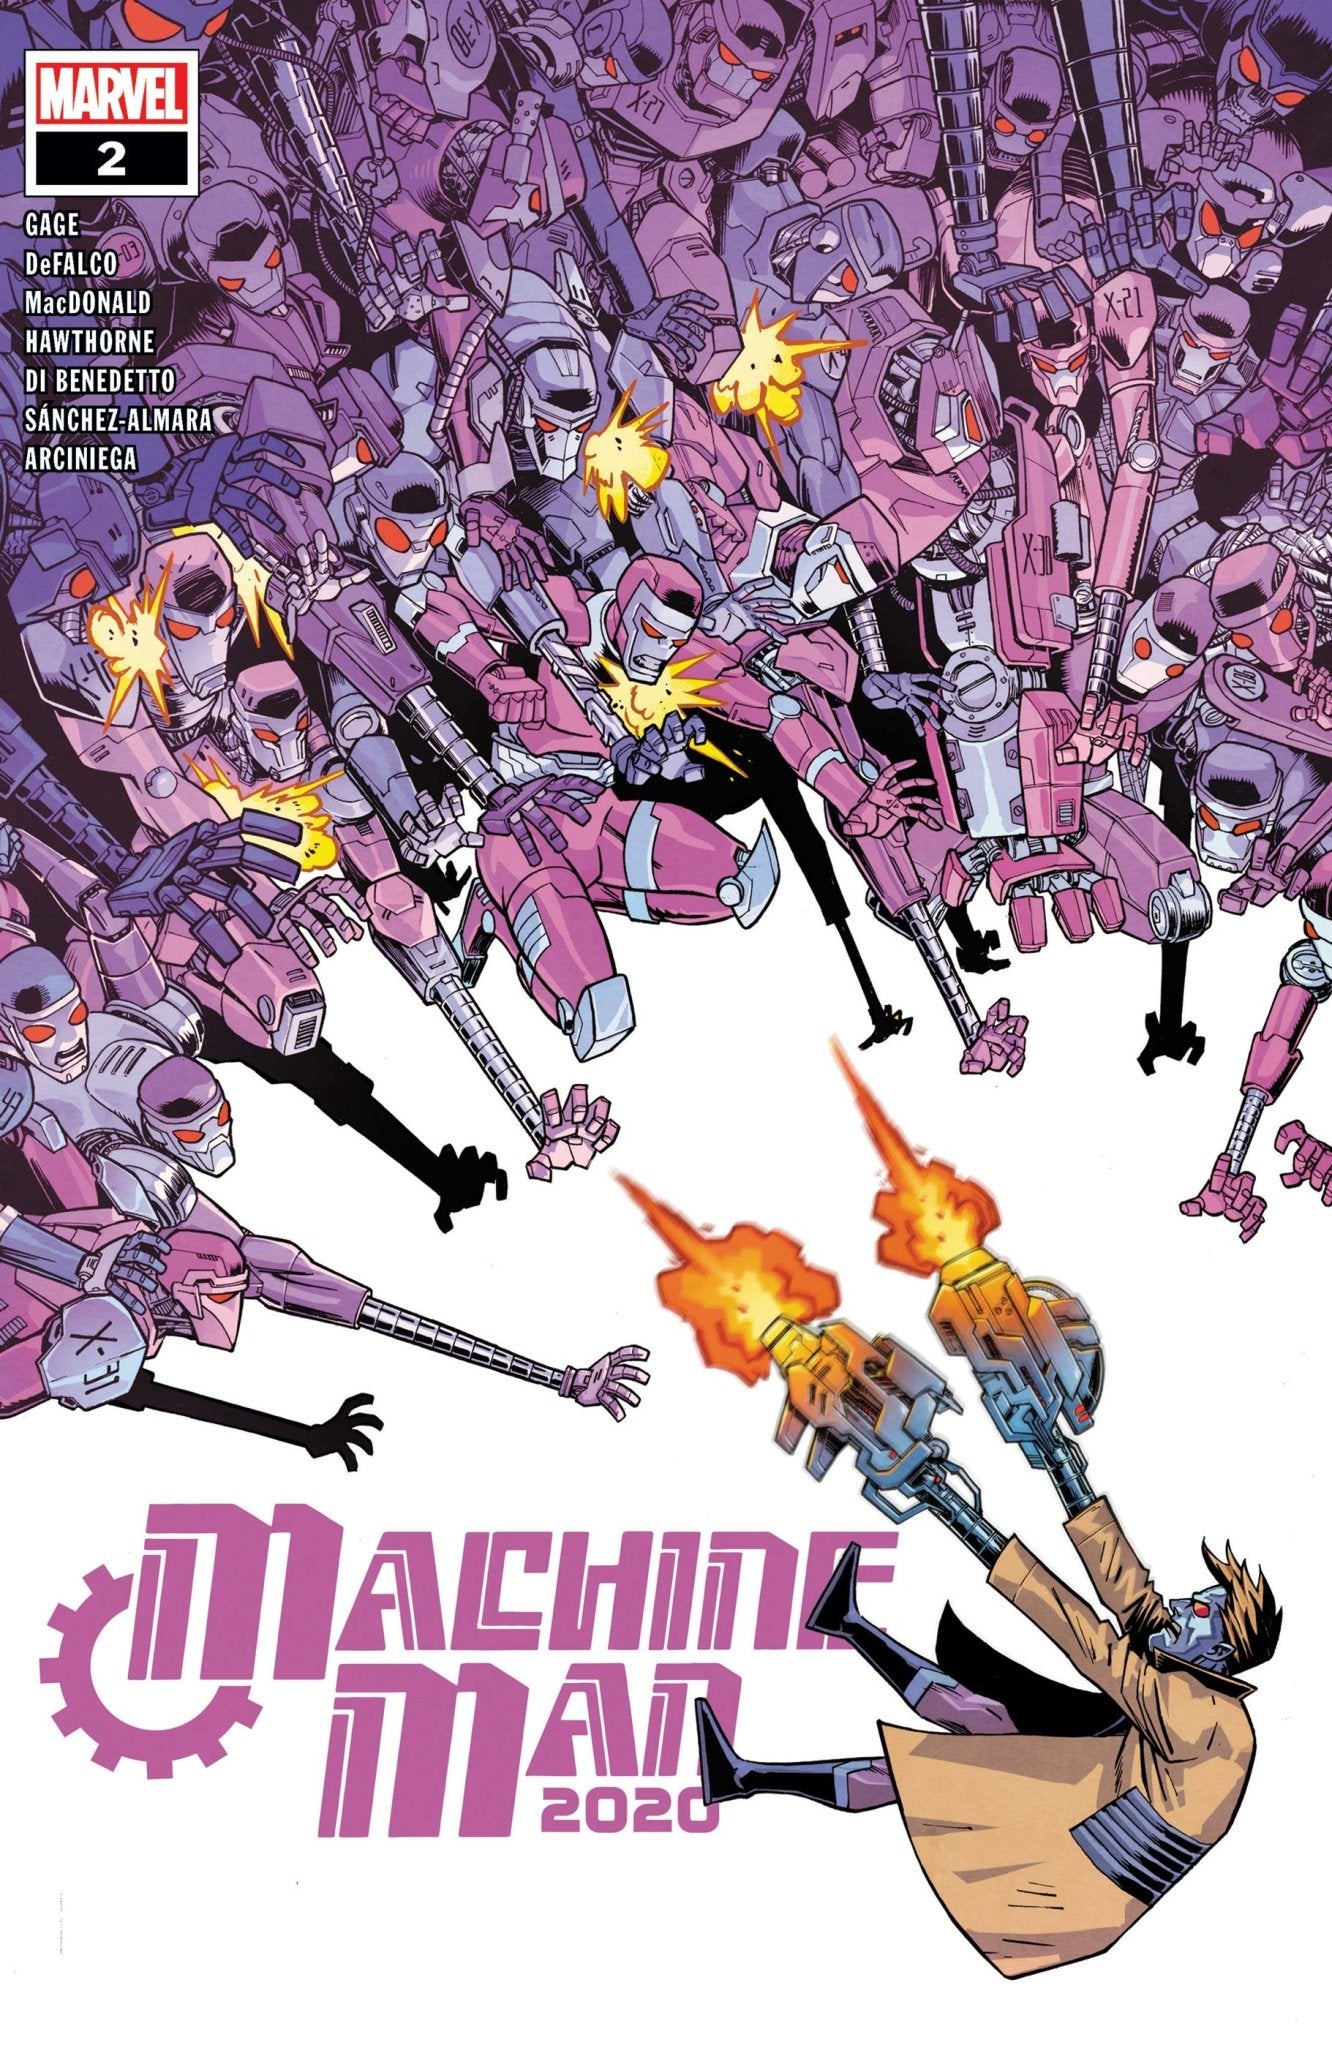 MACHINE MAN 2020 #2 - The Comic Construct